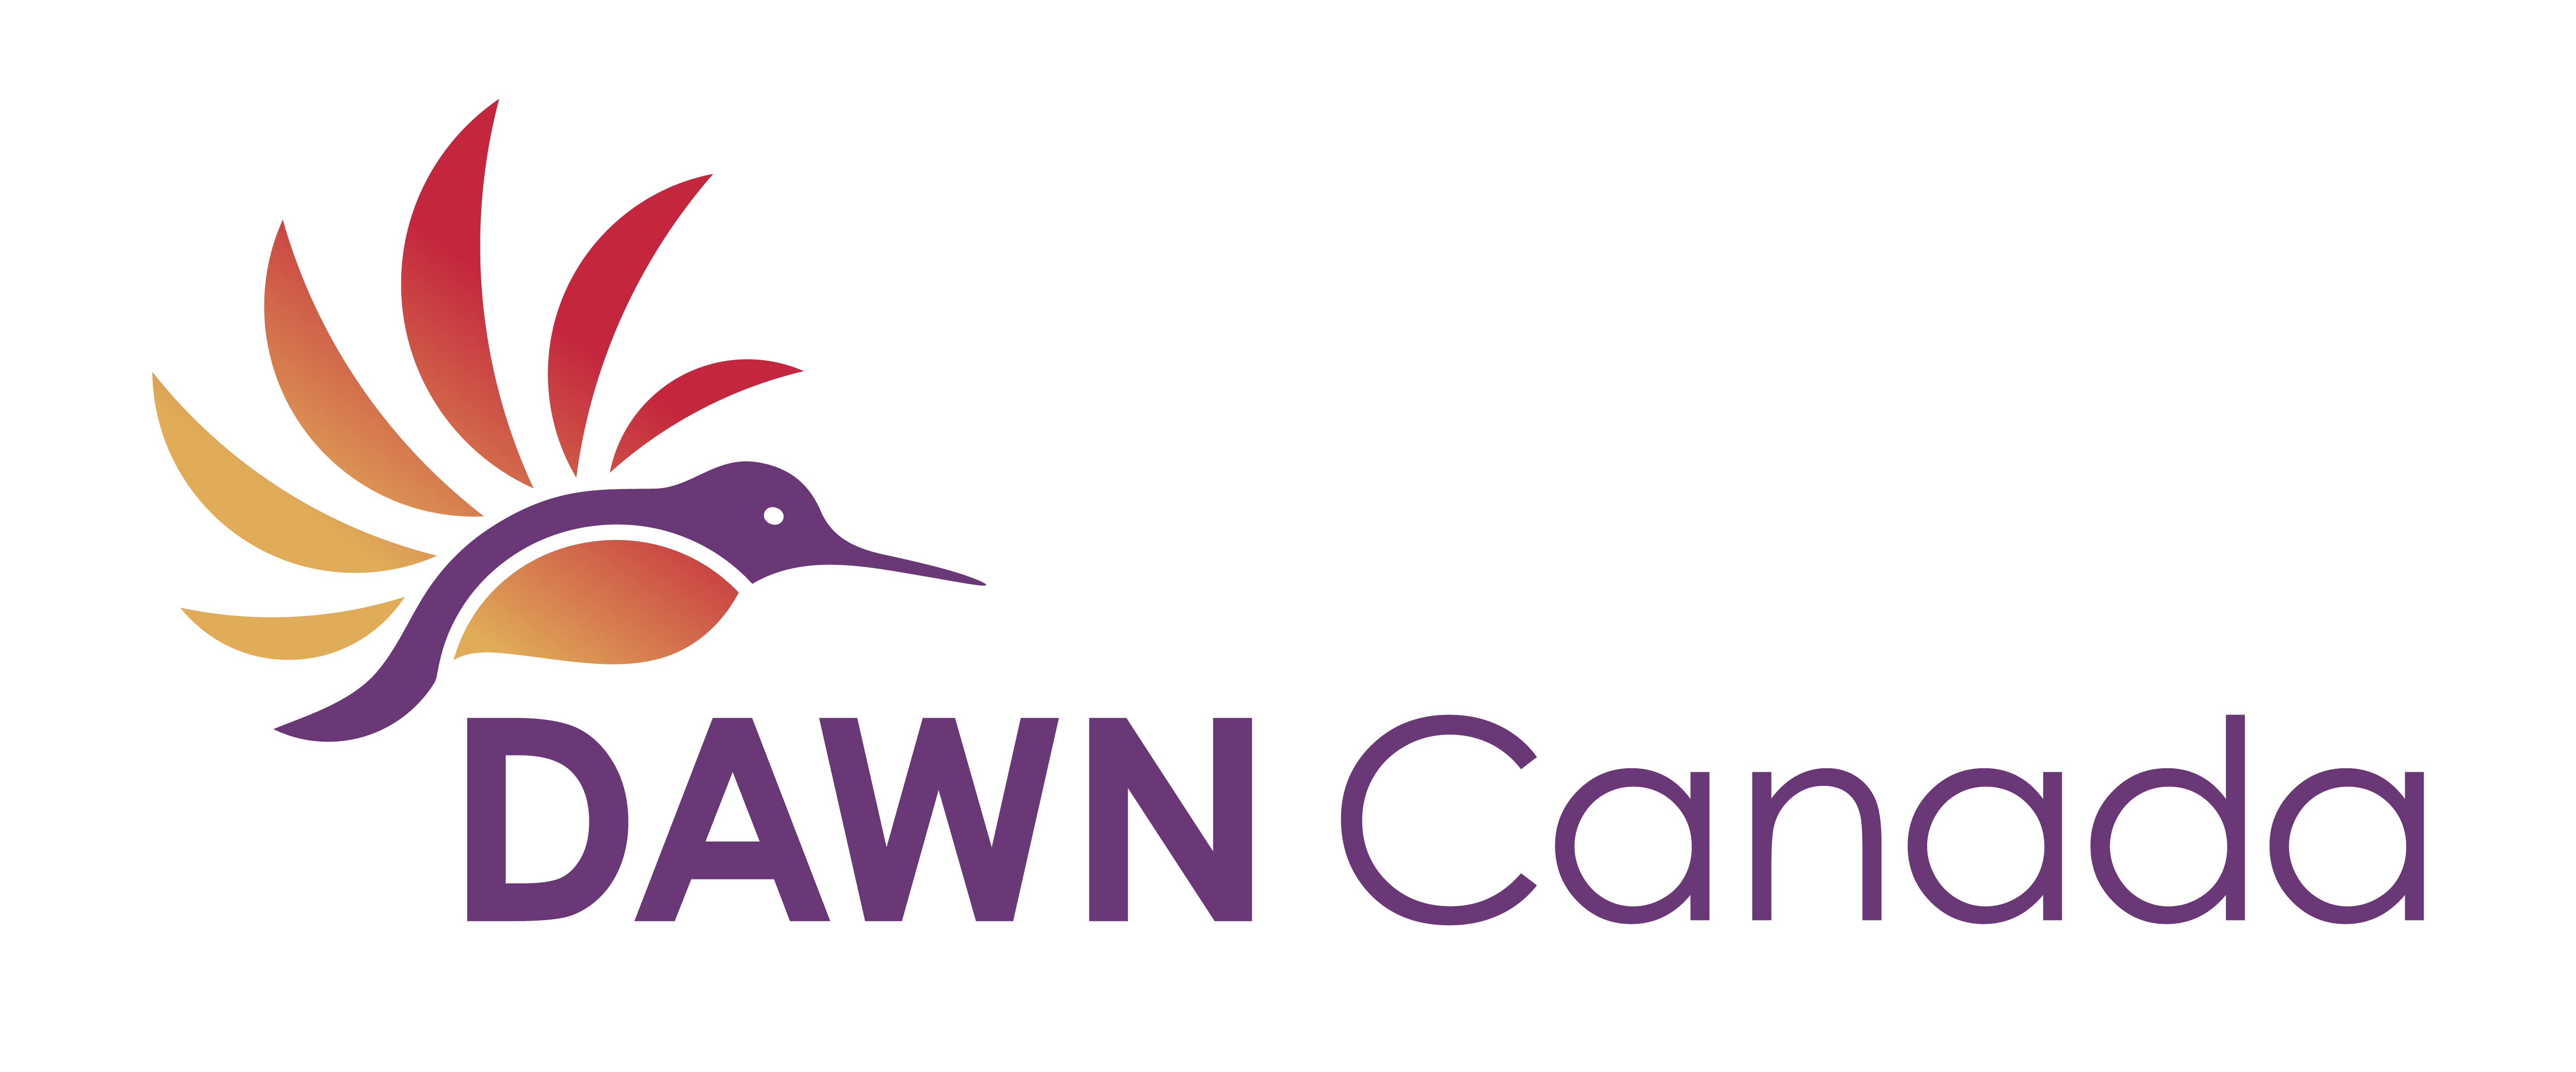 dawncanada-logo-horizontal-colour.png